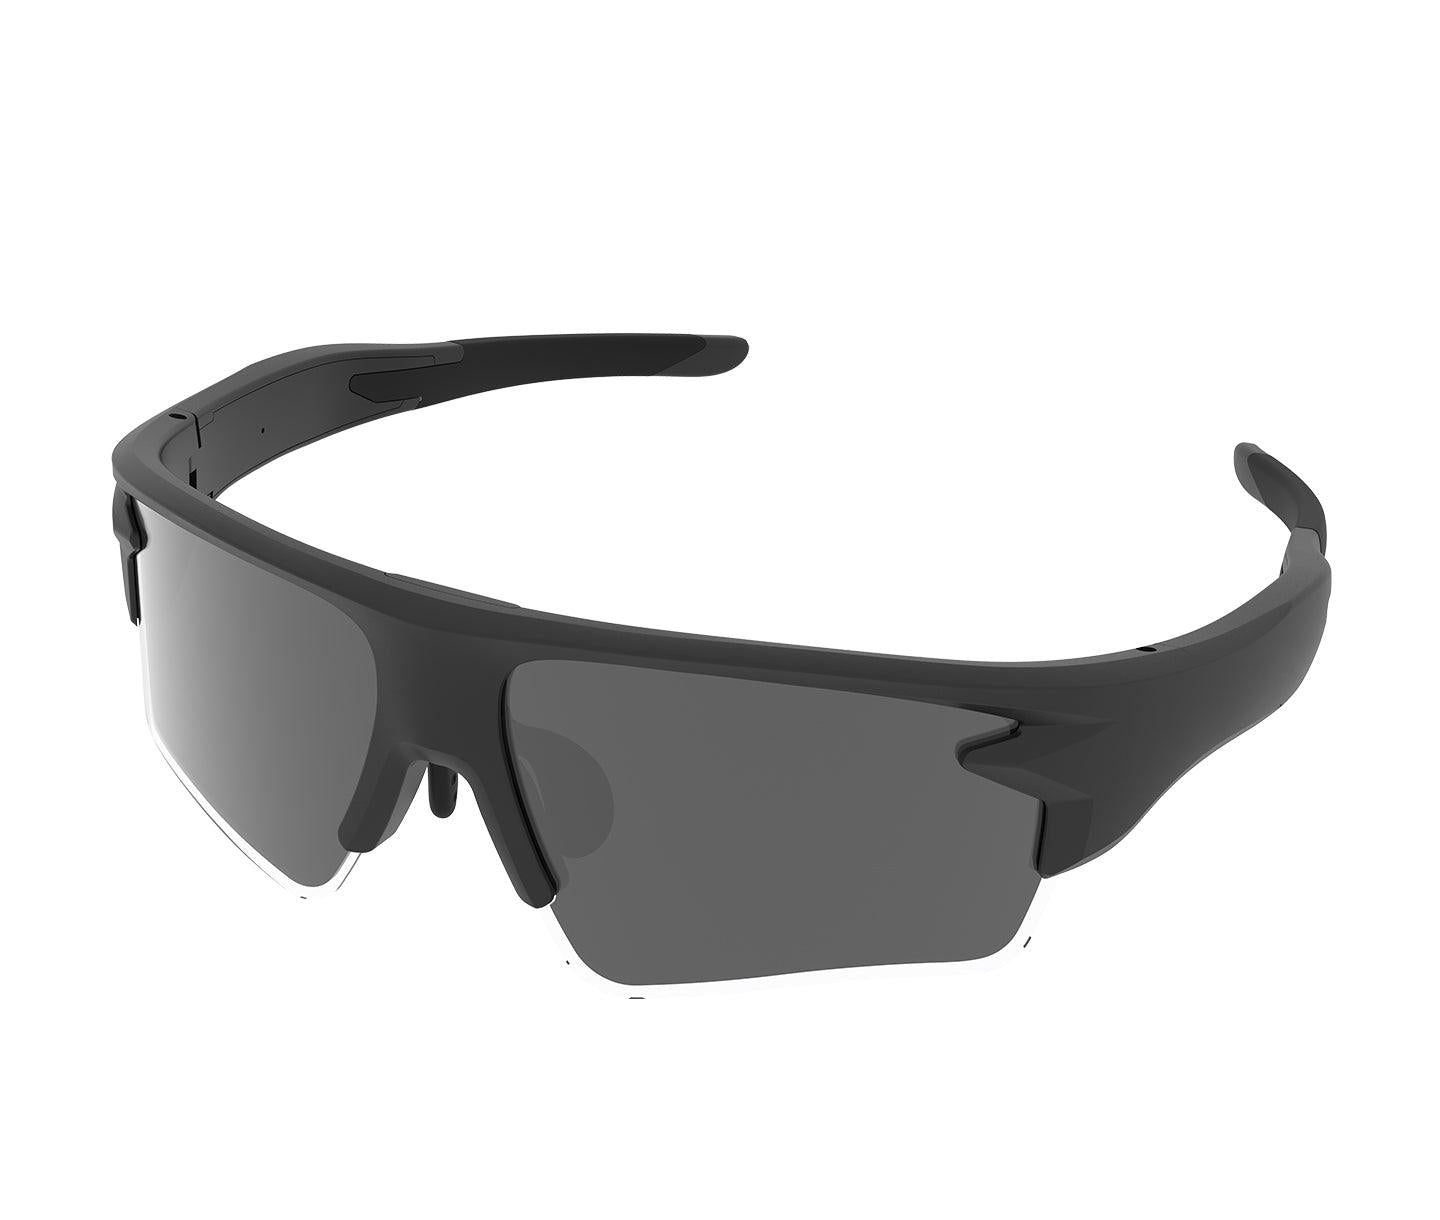 Flash 3050 Slide-to-dim sunglasses